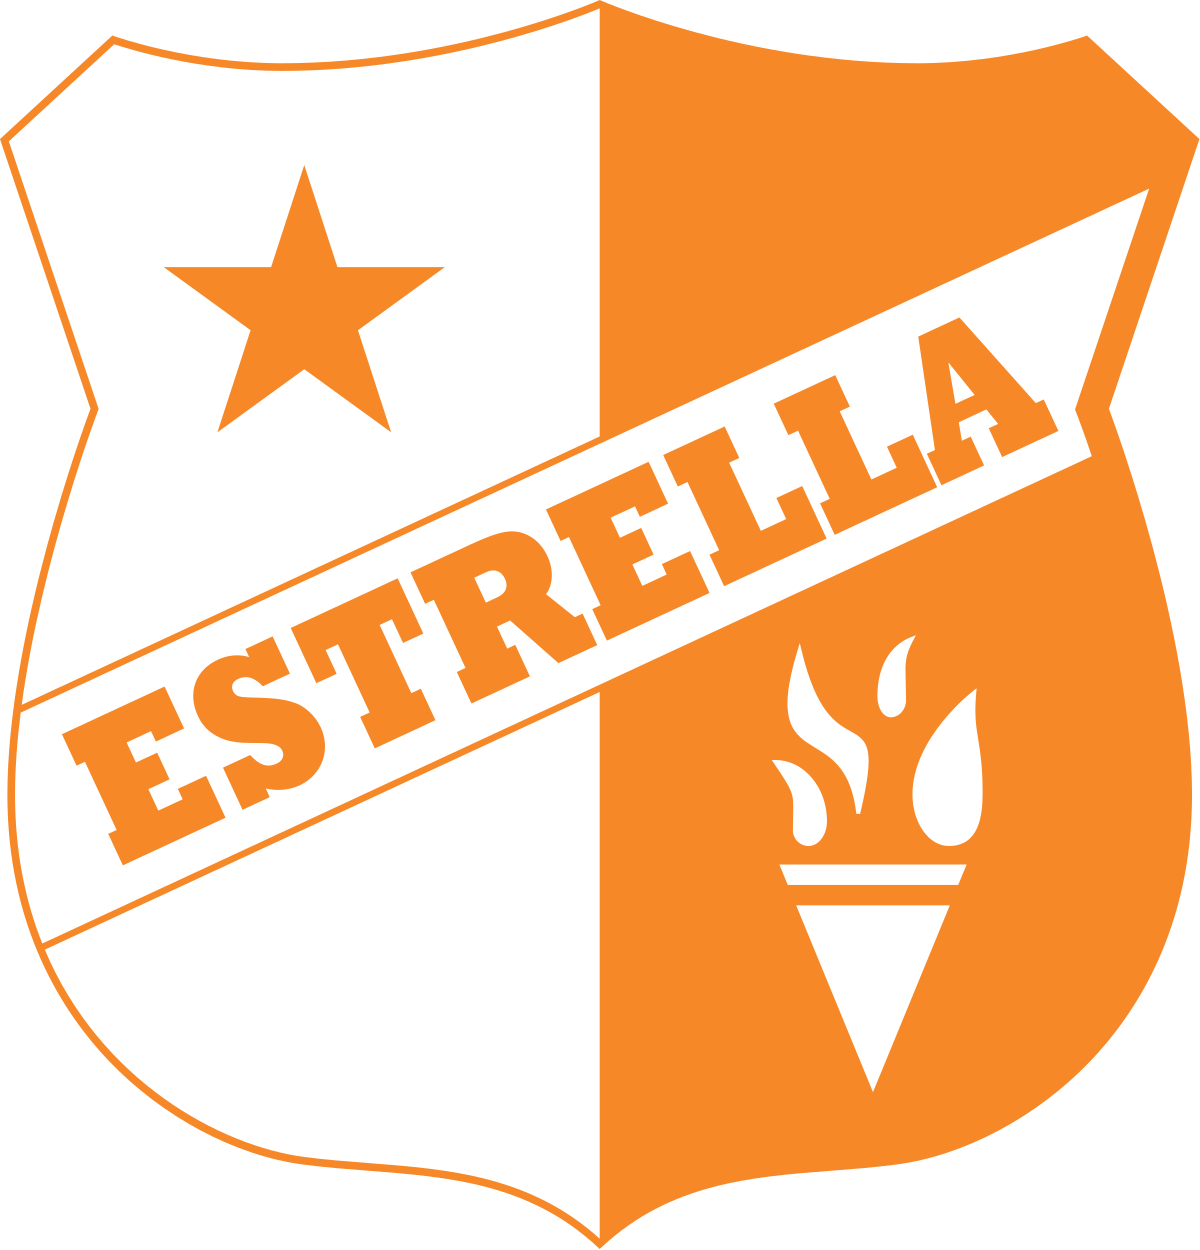 Estrella Papilon logo